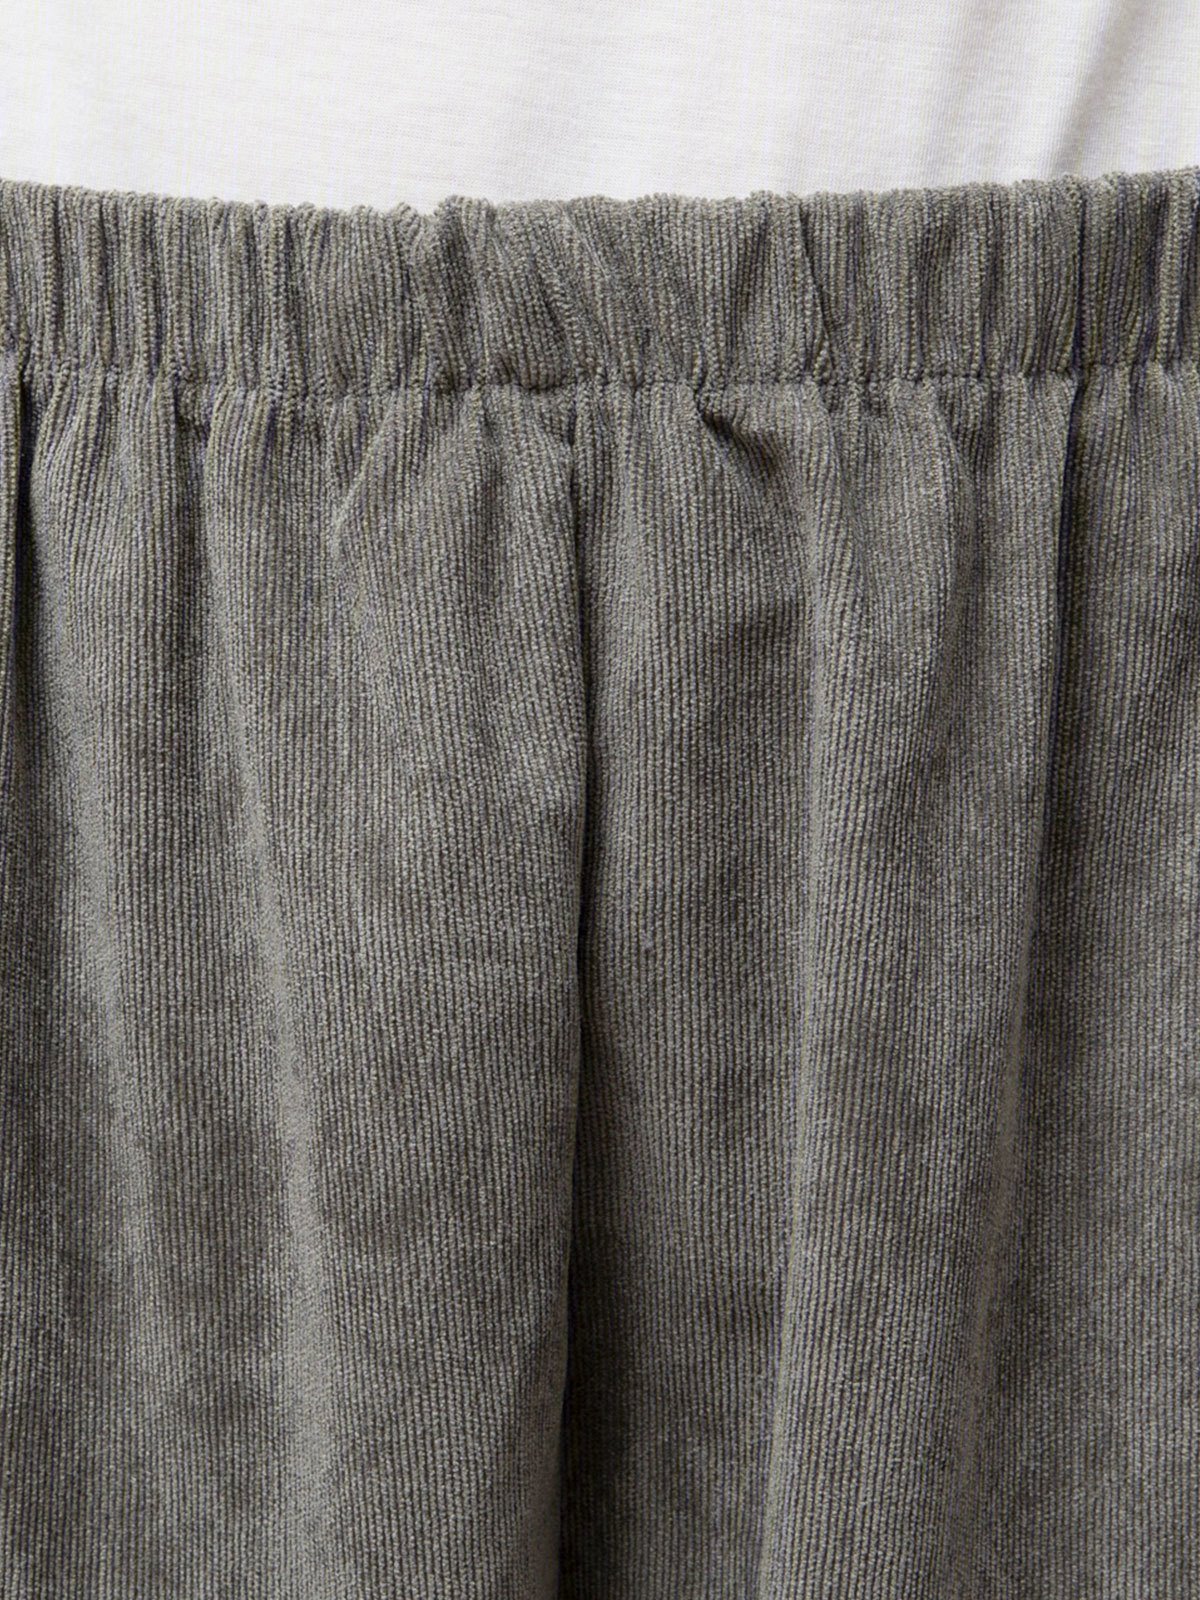 Summer Pockets Striped Casual Capri Trousers